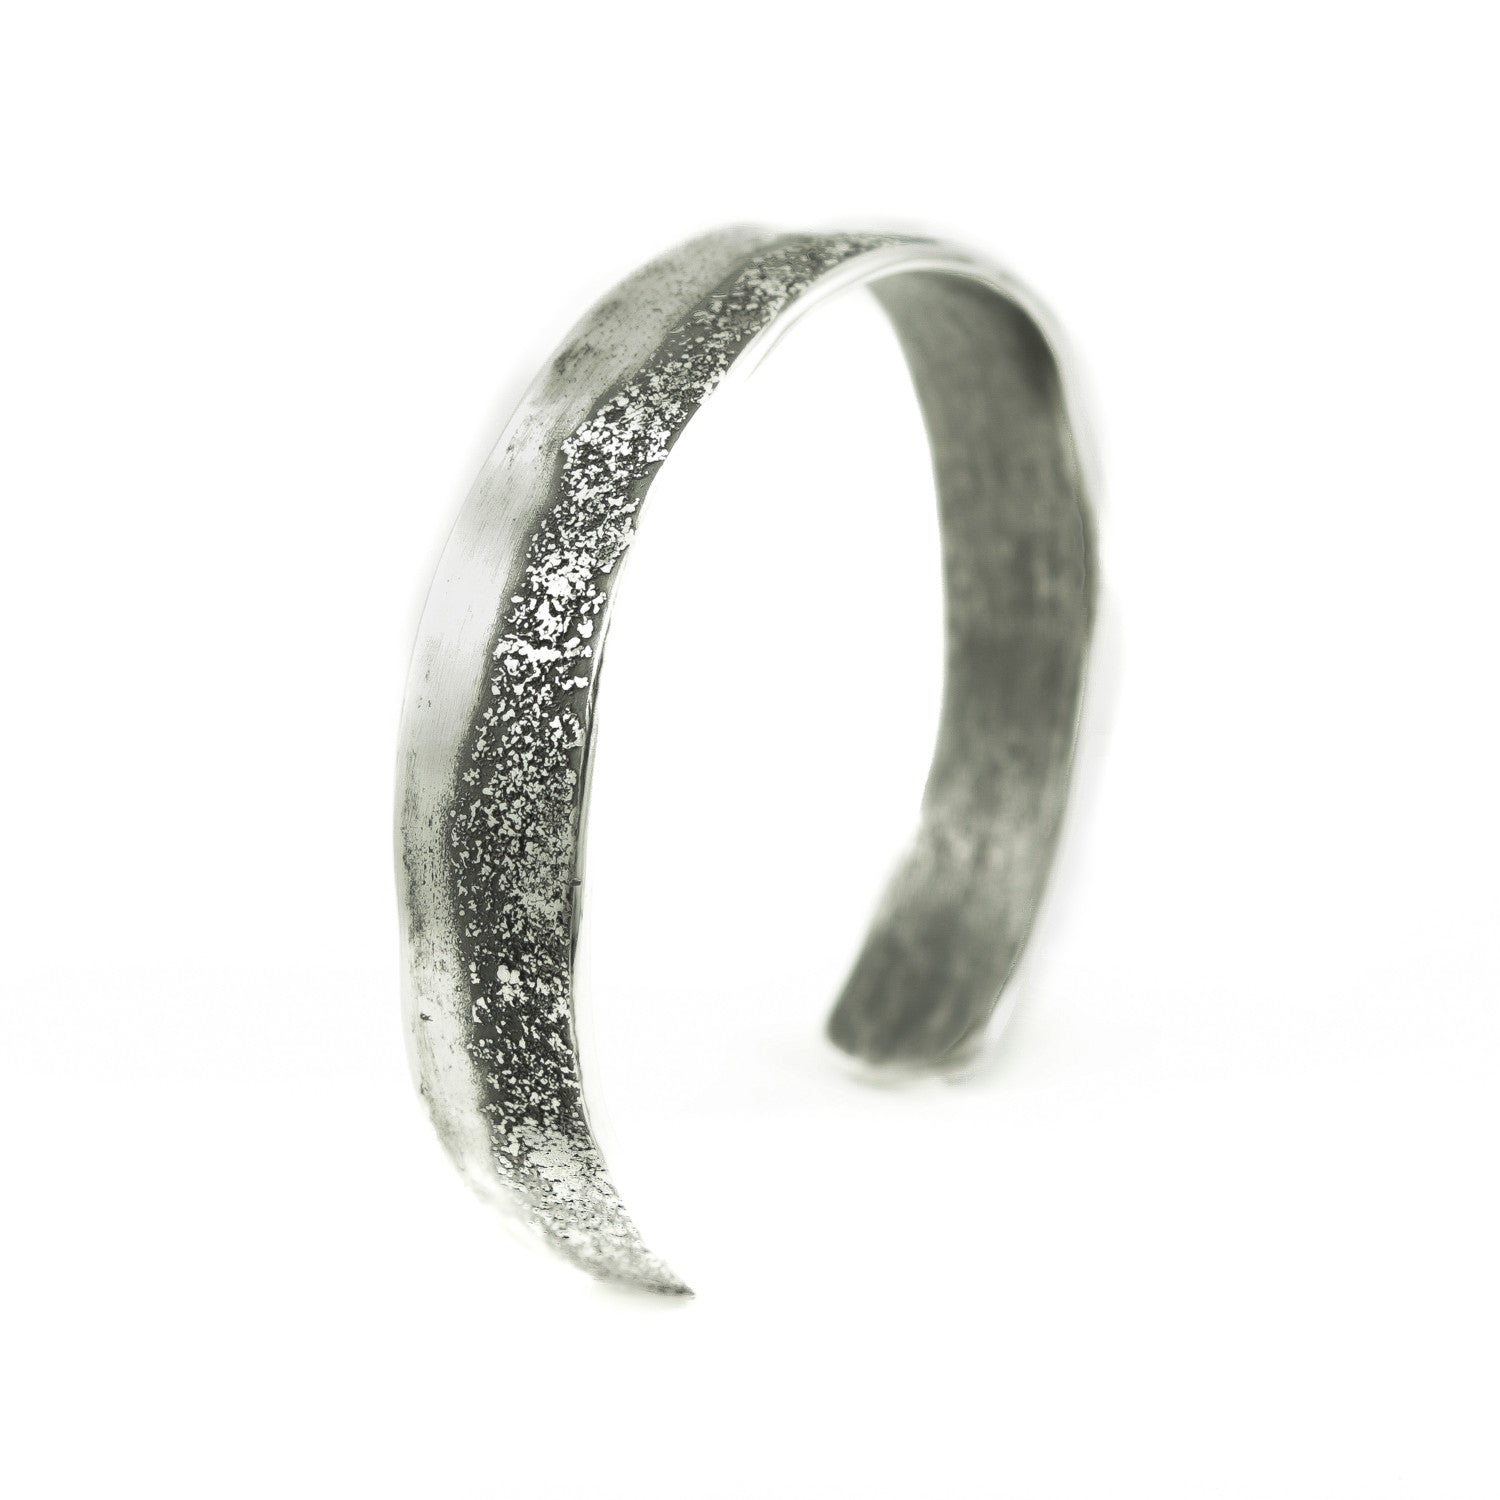 Designer Silver Cuff Bracelet with Texturing